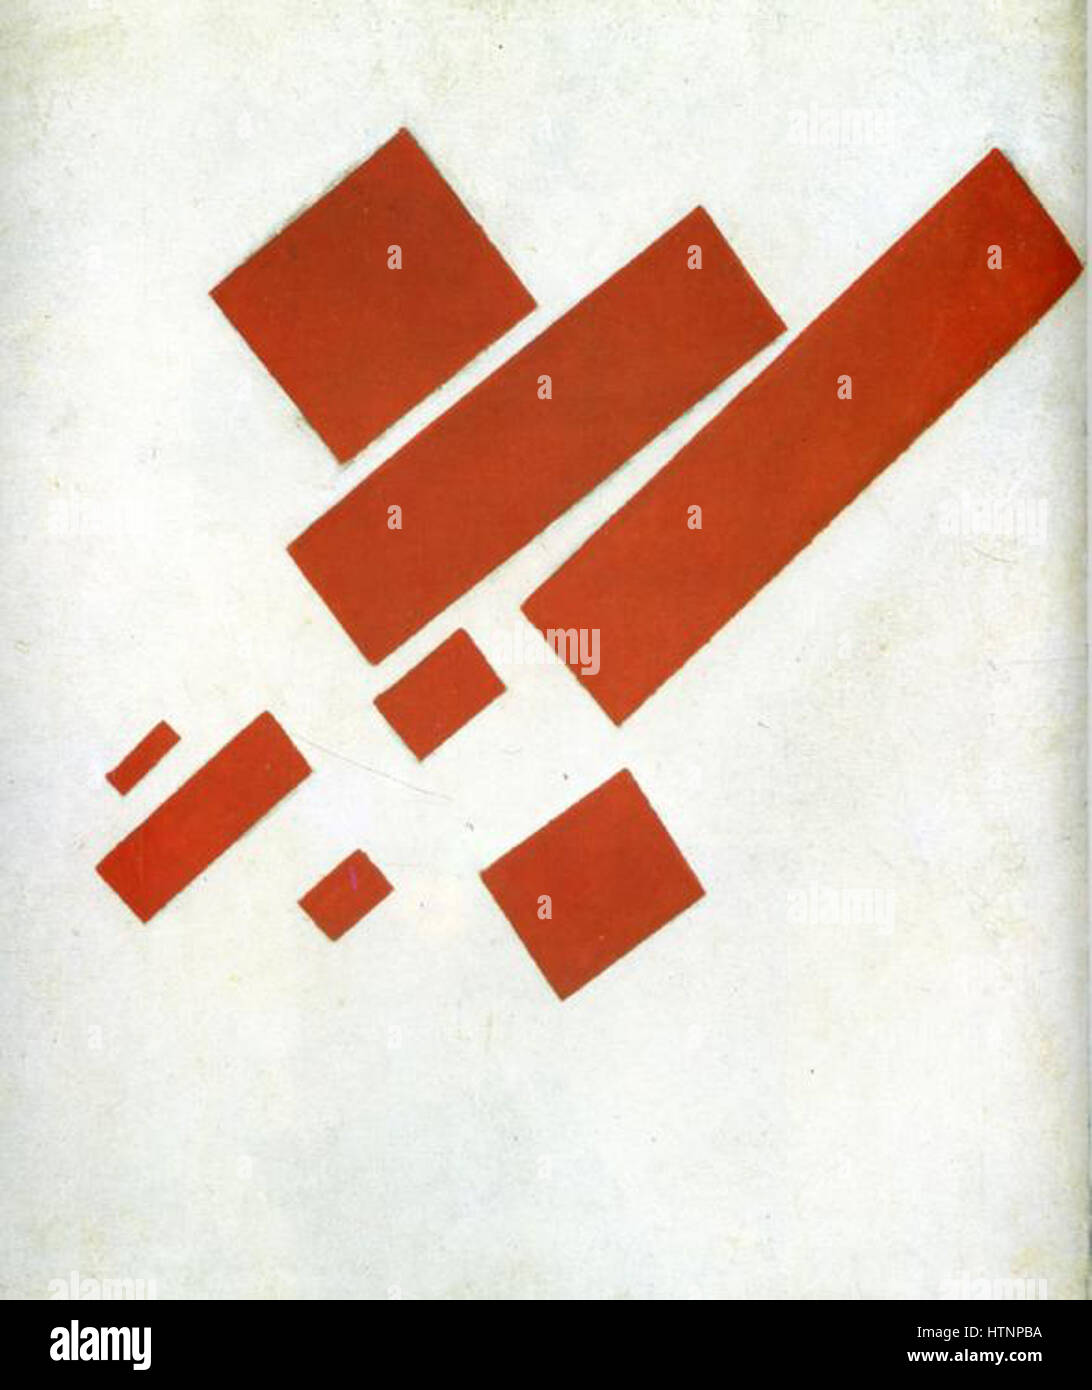 Malevich-Suprematism. Stock Photo